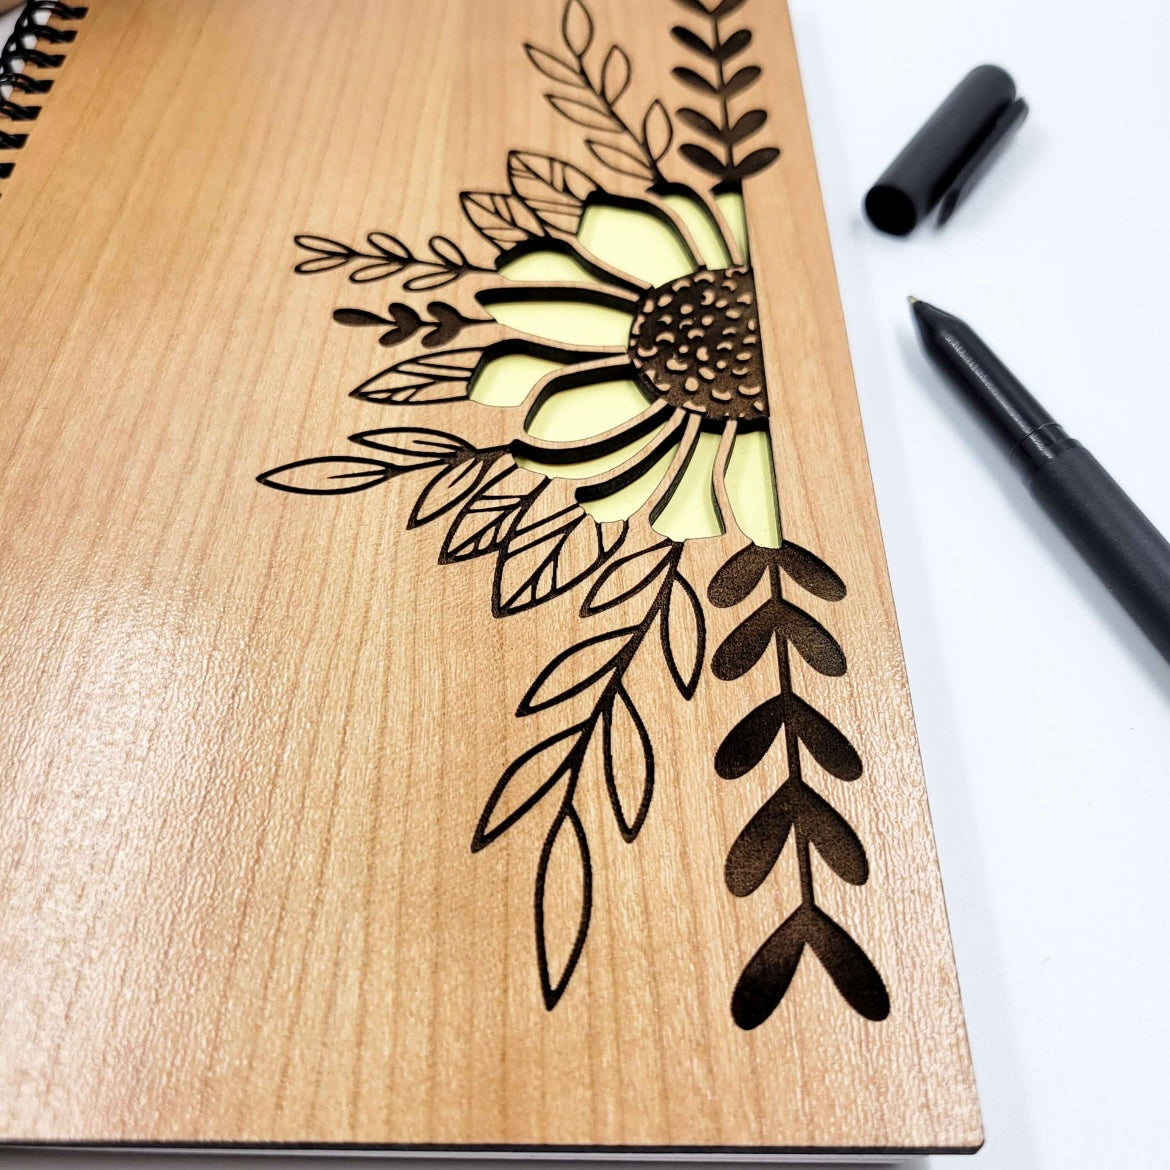 Sunflower Wood Journal - Blank